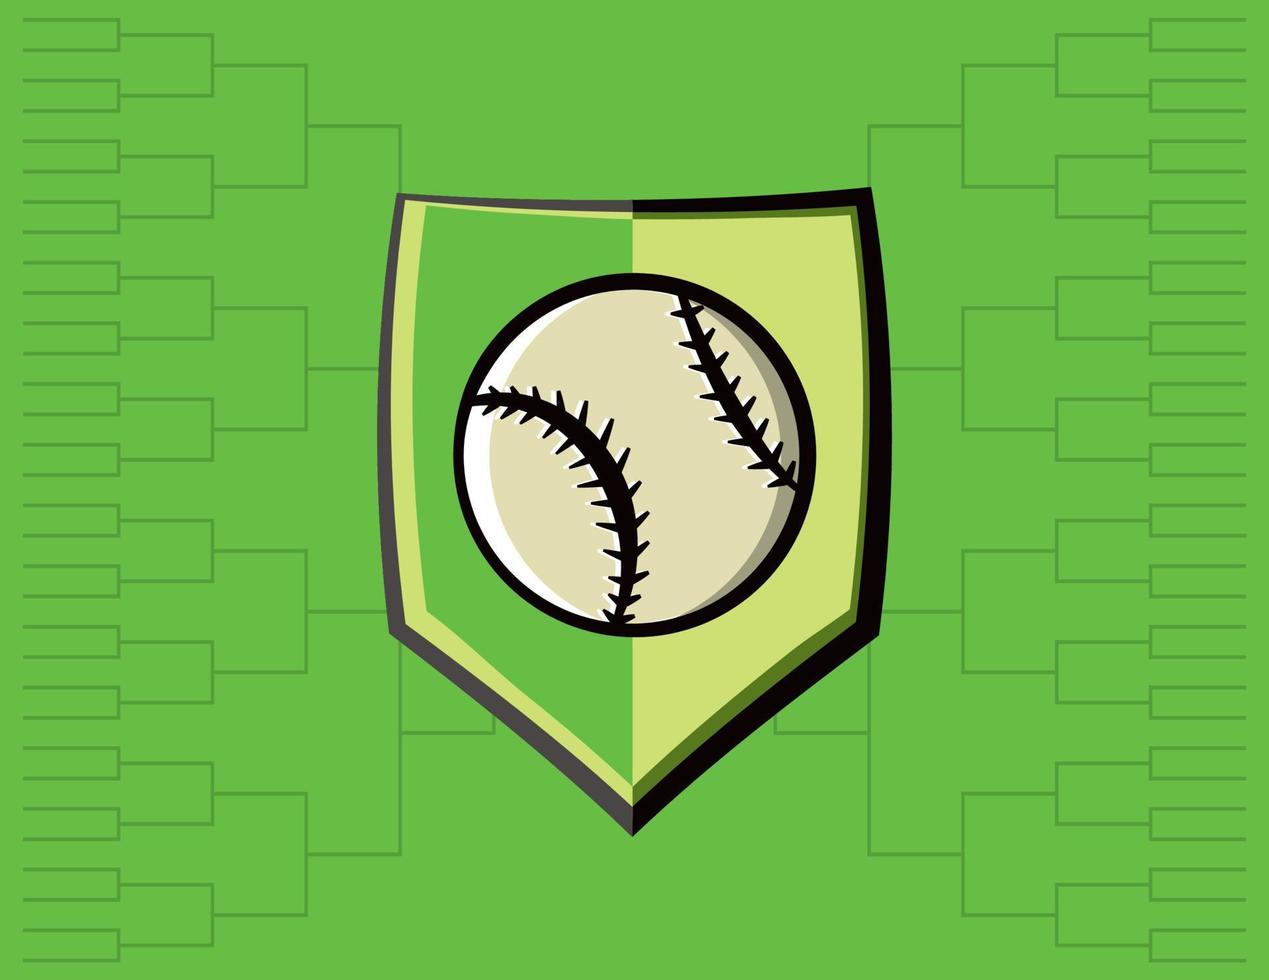 Baseball Emblem and Tournament Background vector